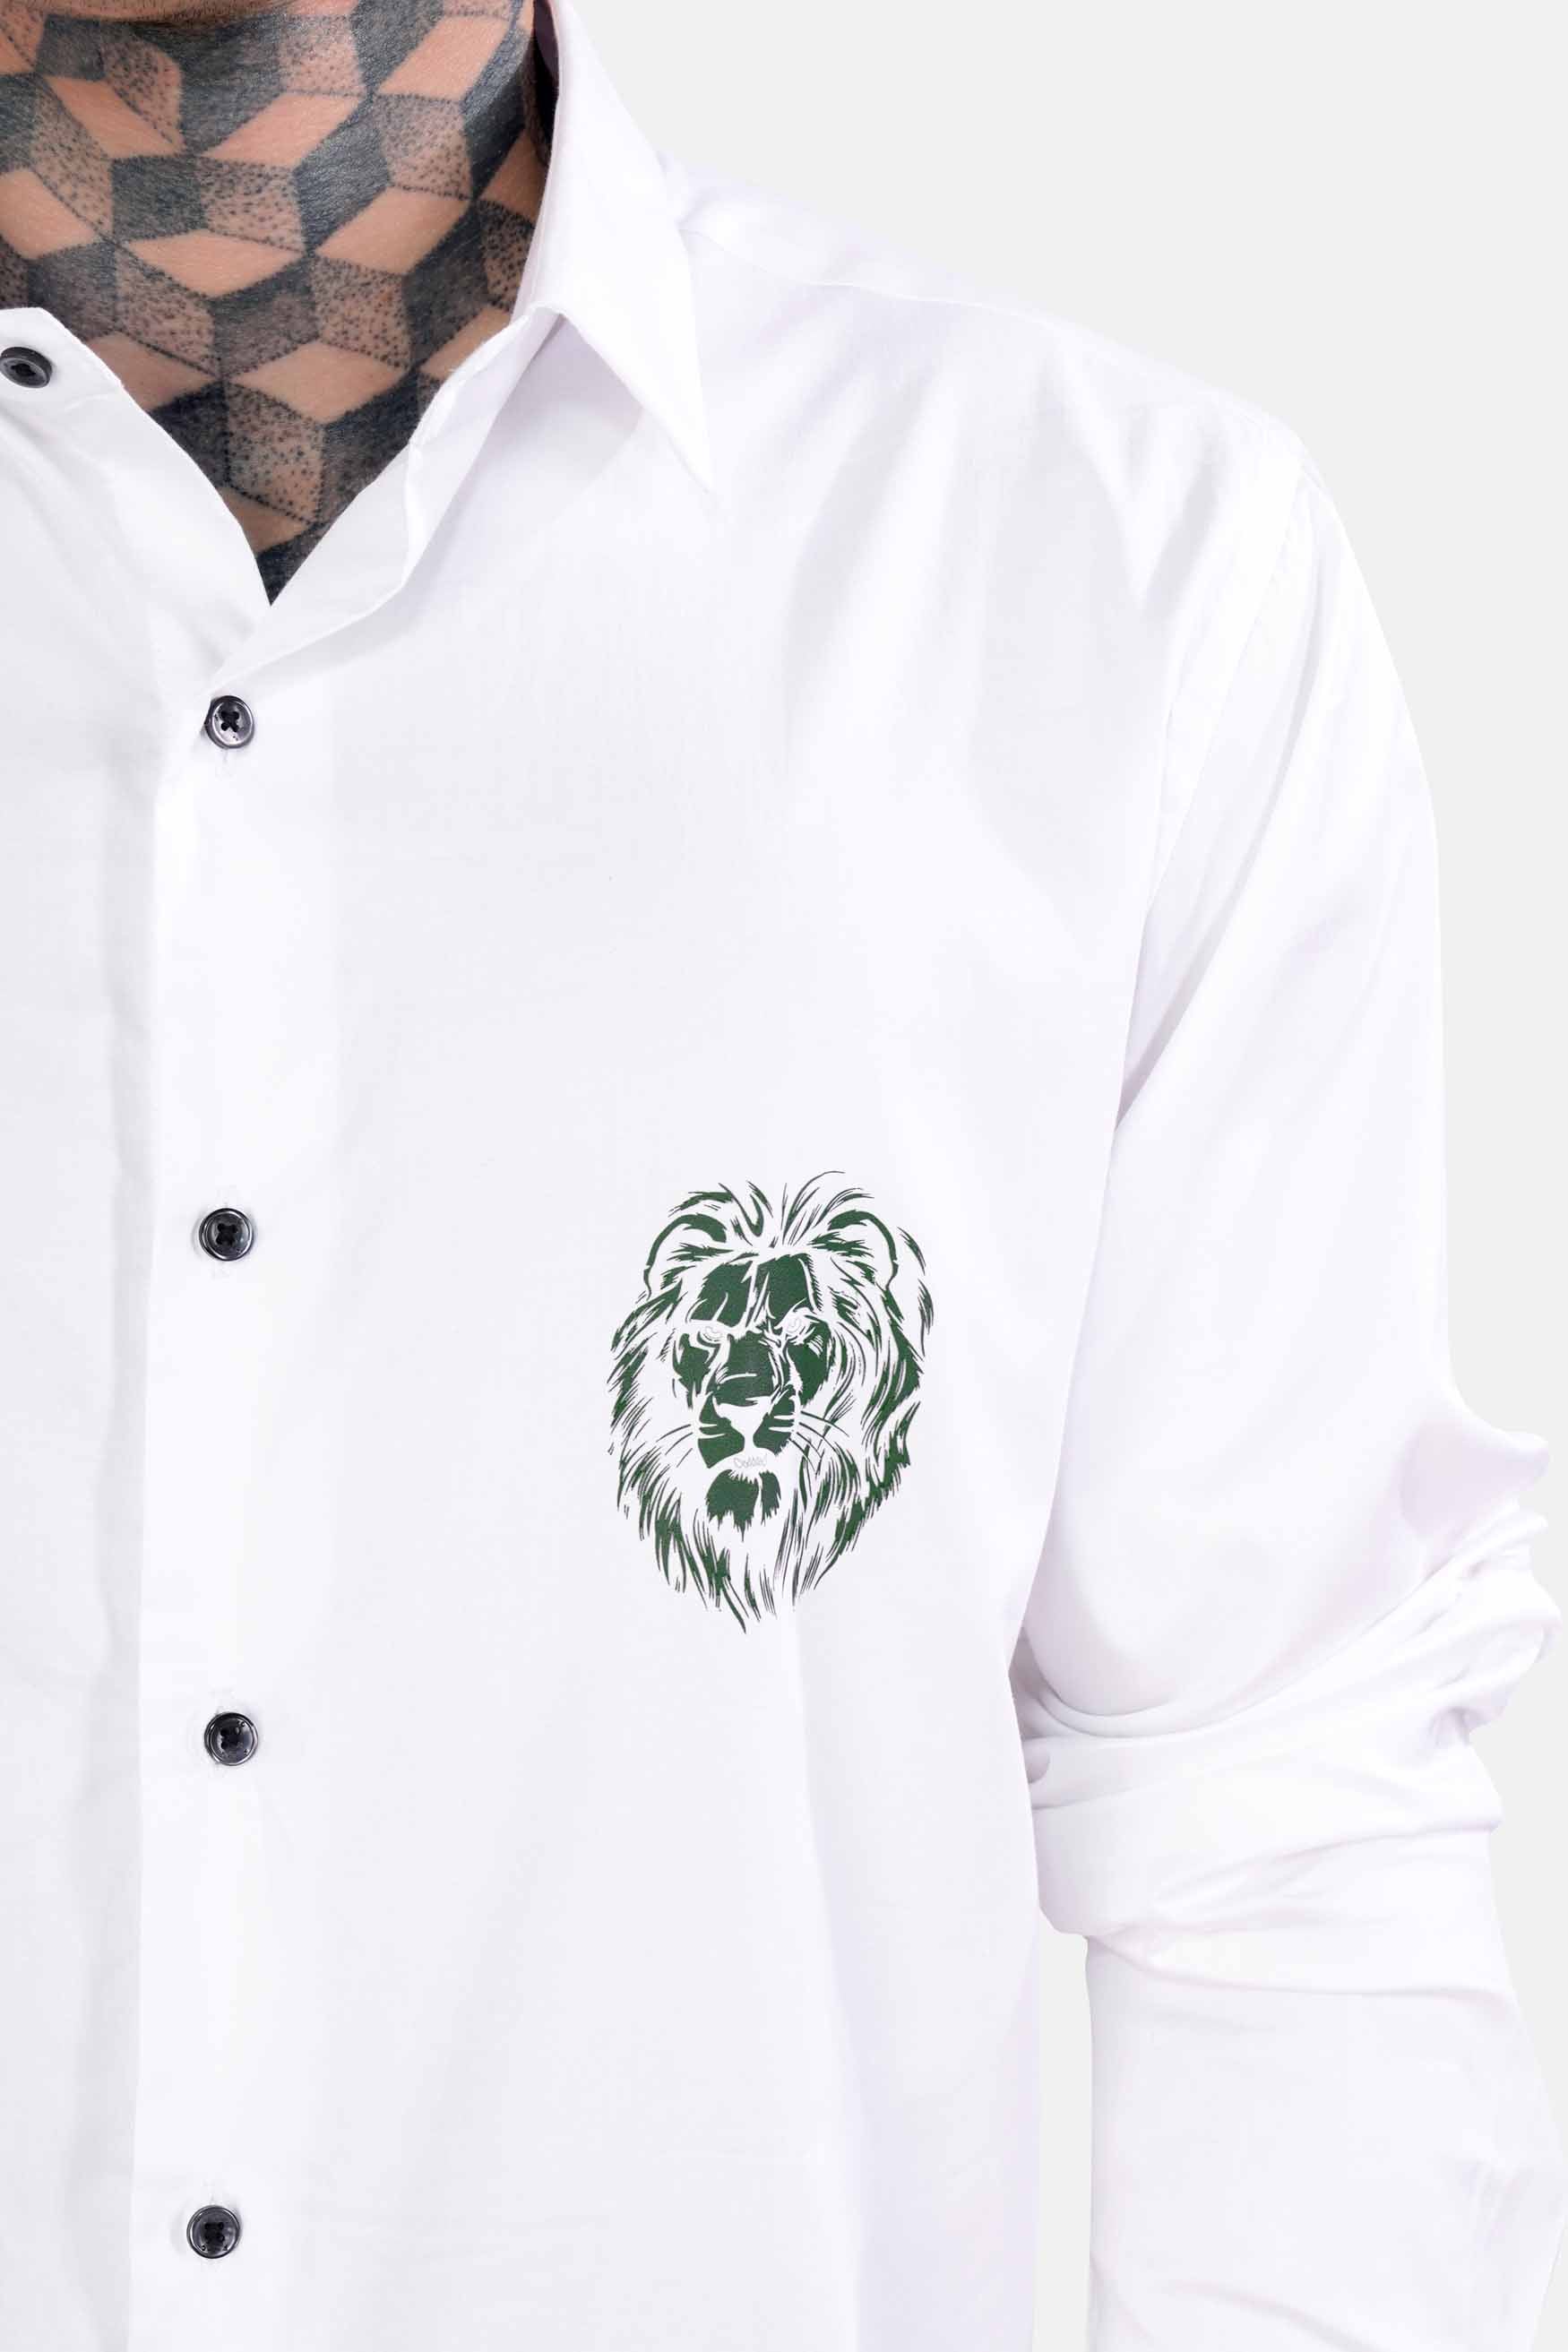 Bright White Lion Printed Subtle Sheen Super Soft Premium Cotton Designer Shirt